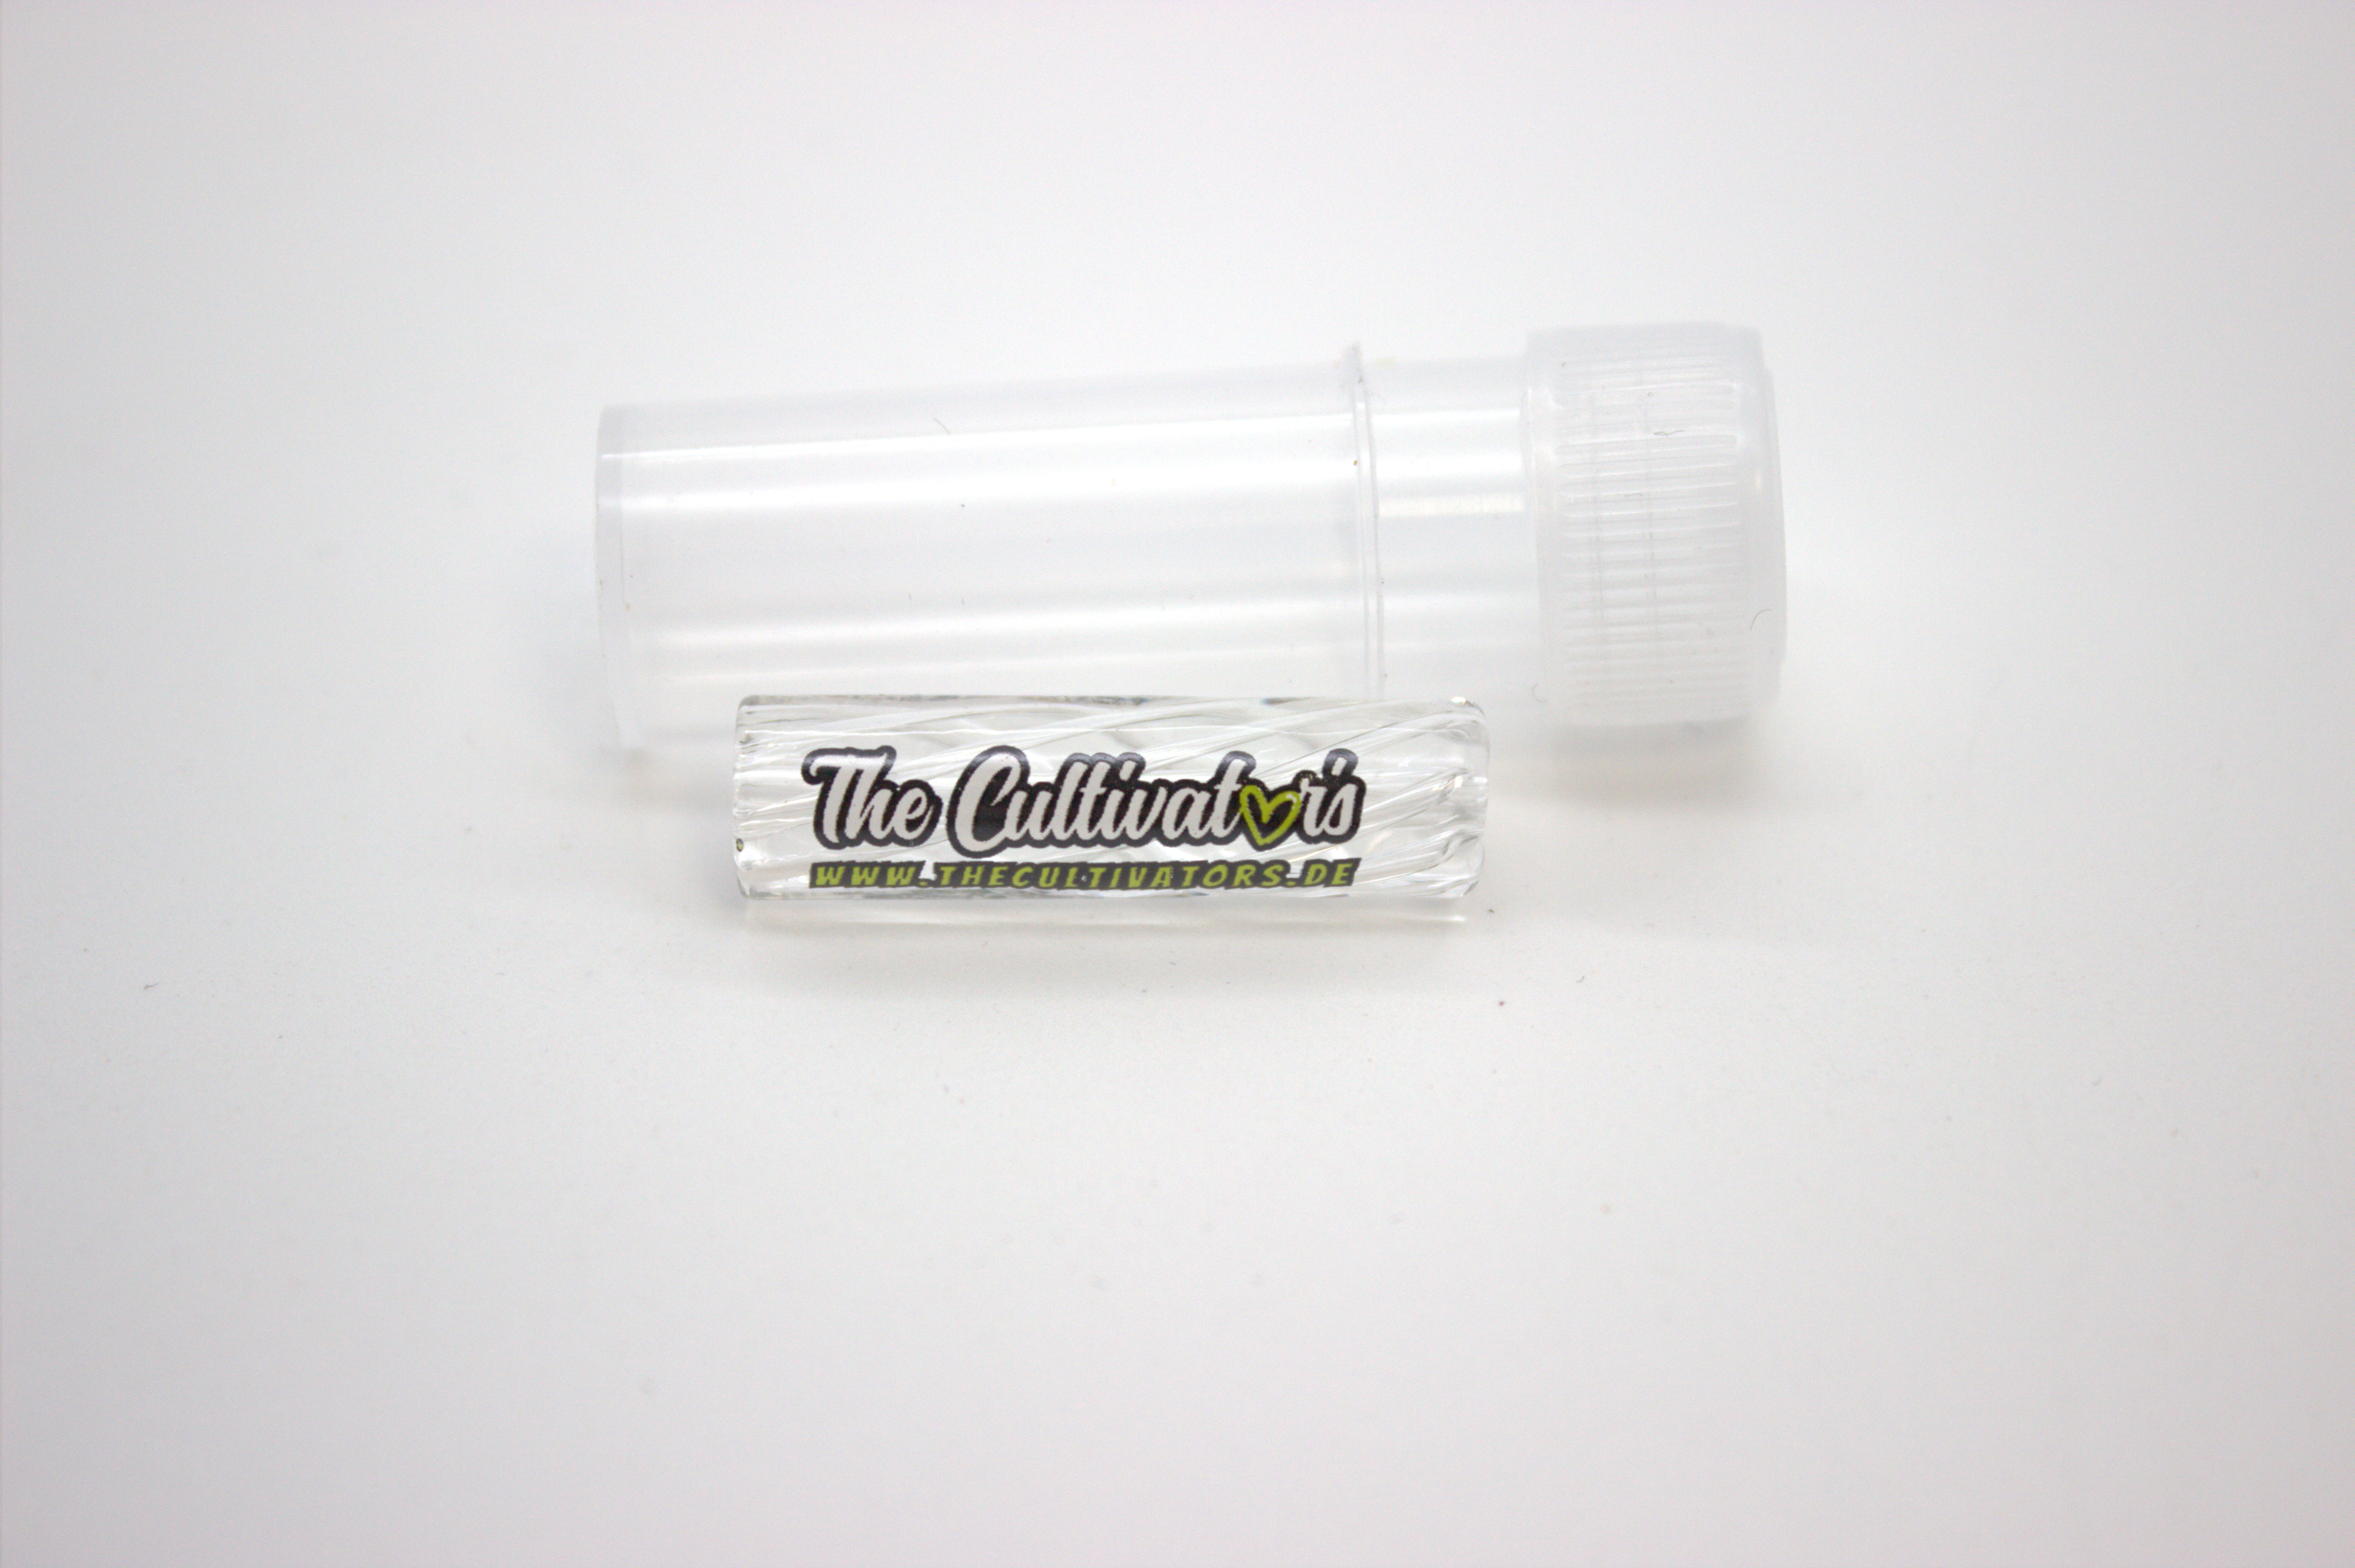 Spiral Glasfilter Tip 8mm "The Cultivators" Greenstore Twist